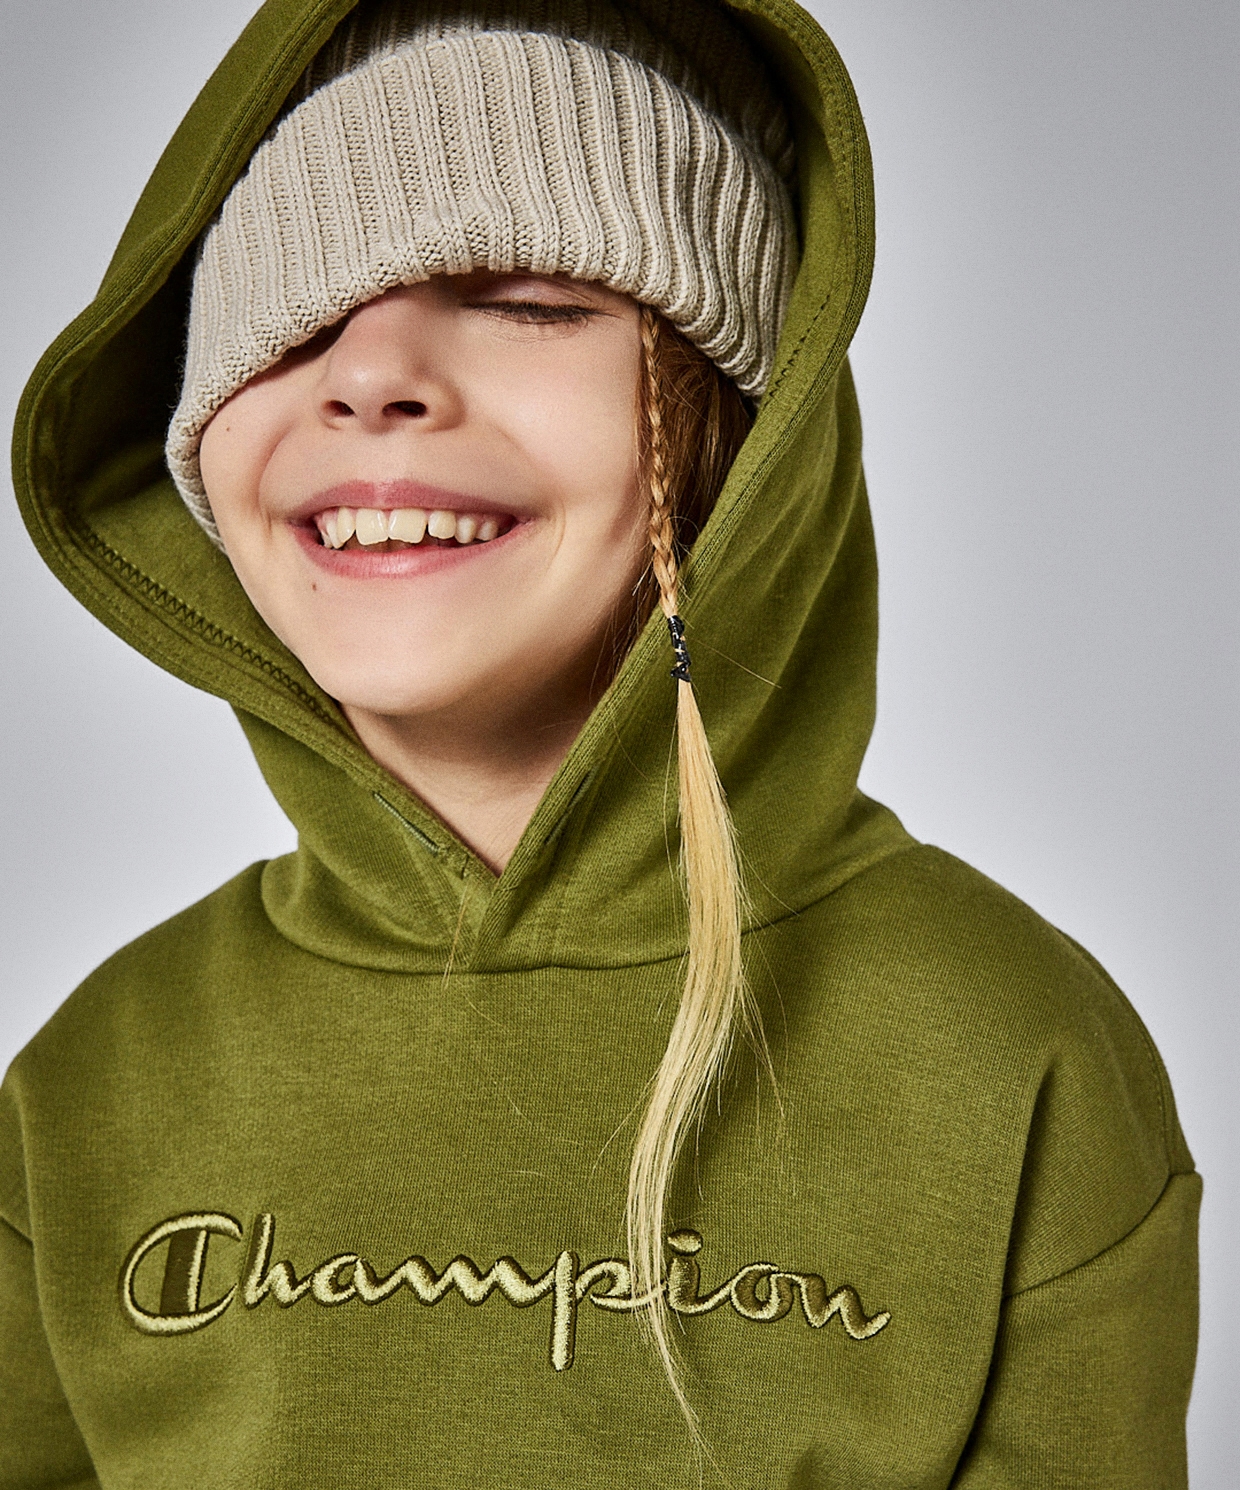 resm Champion Hooded Sweatshirt